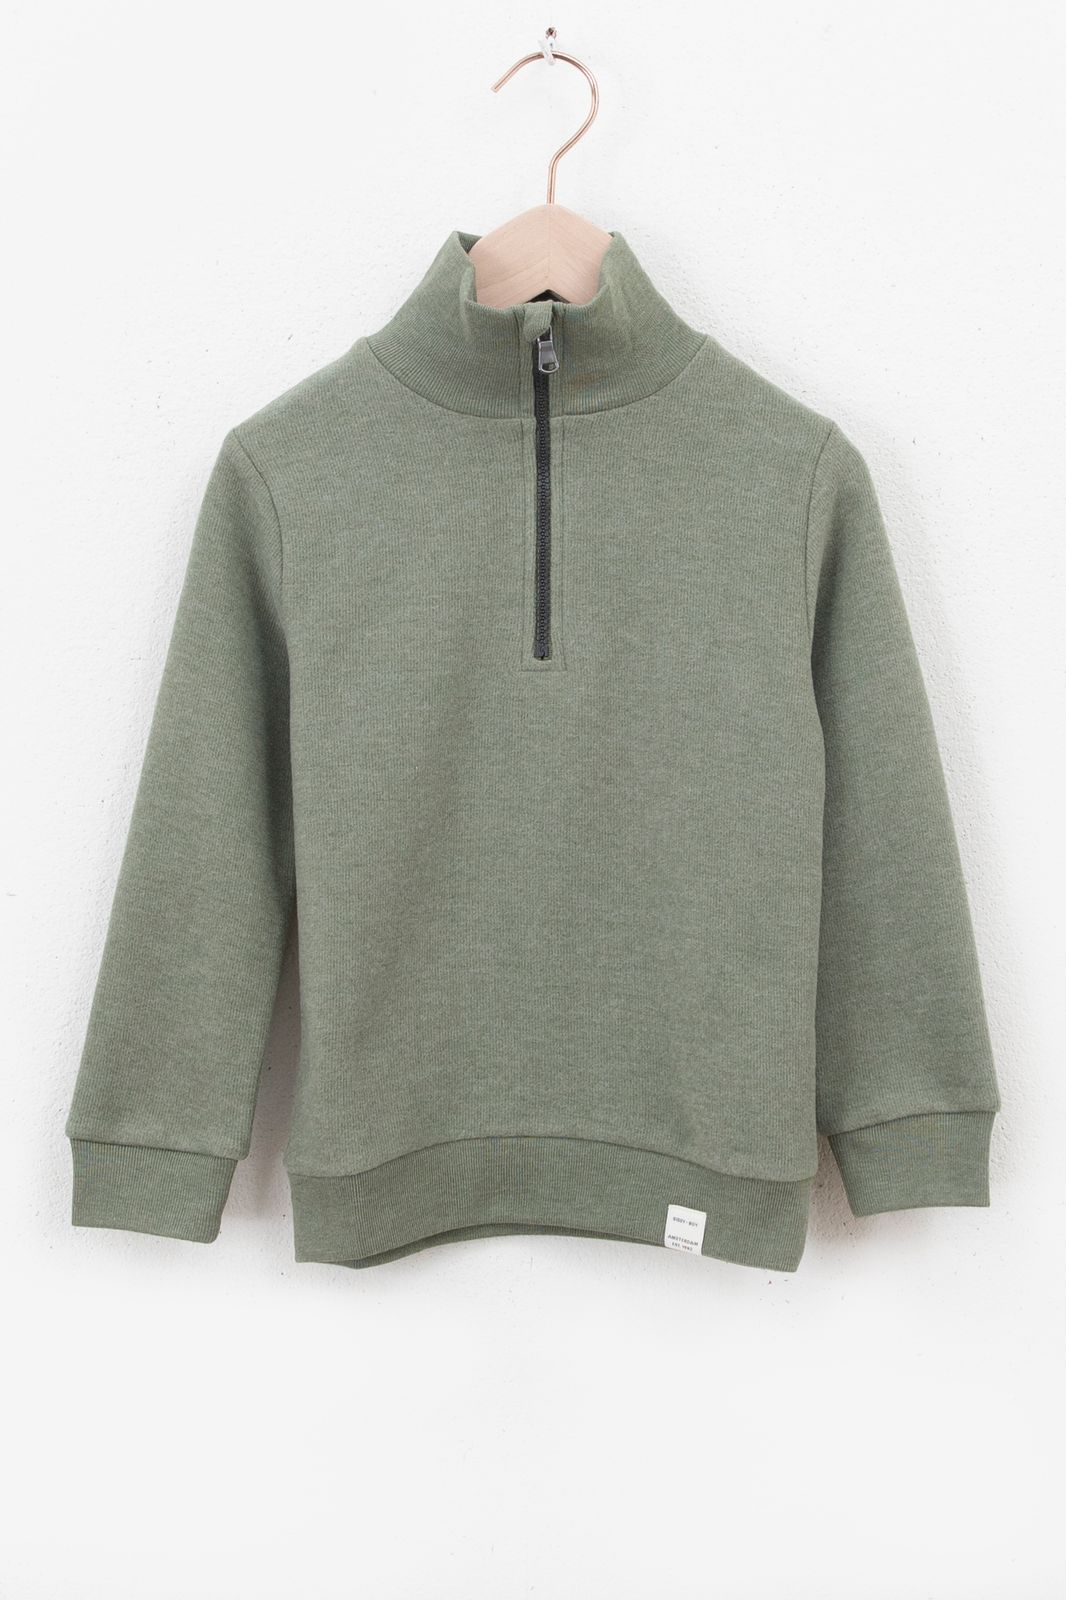 Sweater mit Reißverschluss - dunkelgrün